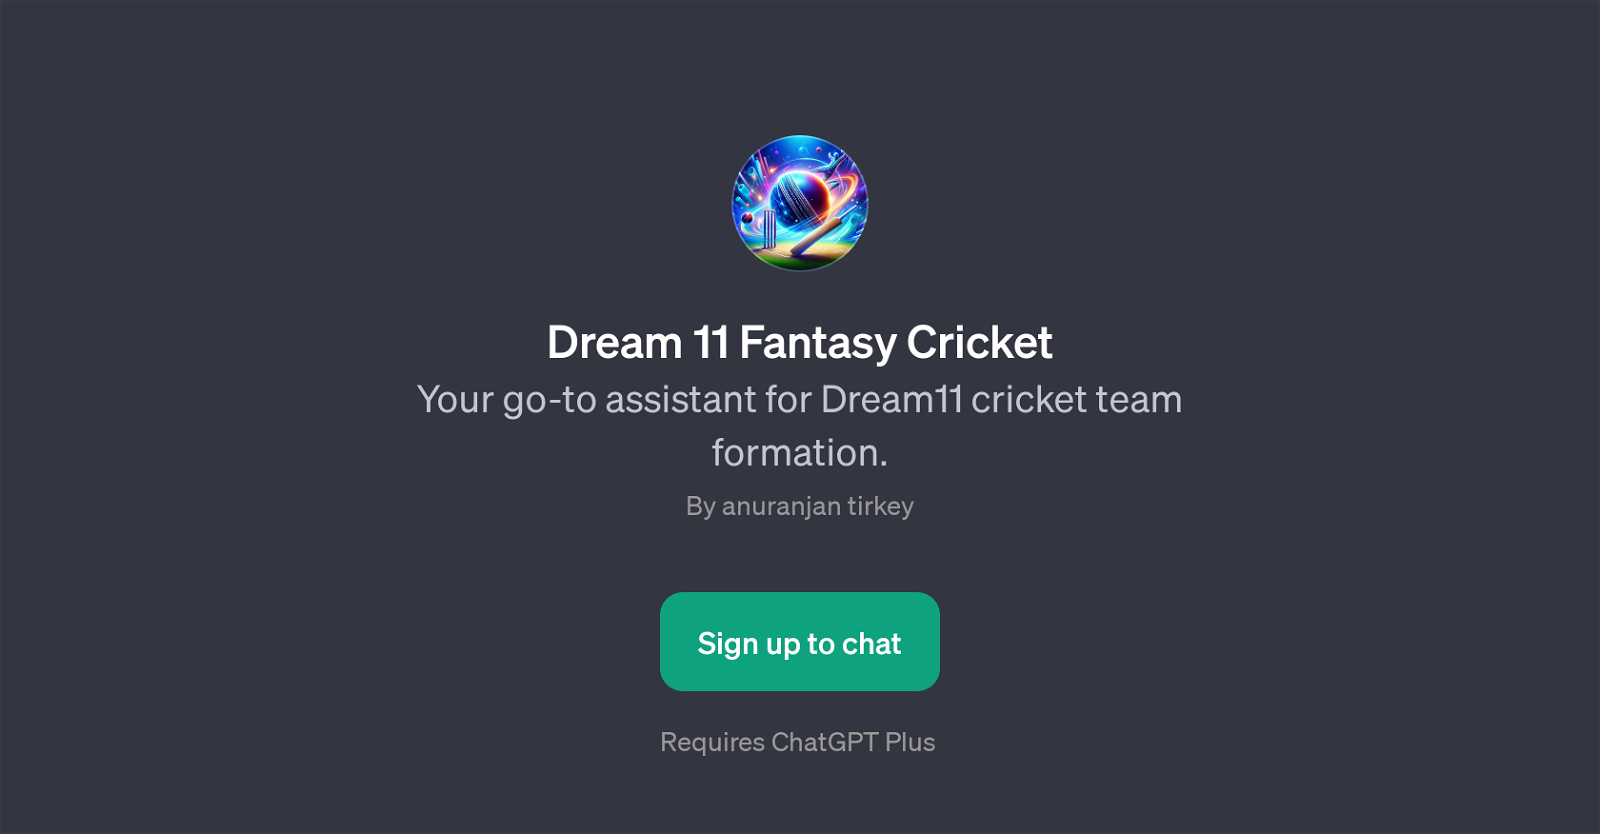 Dream 11 Fantasy Cricket website